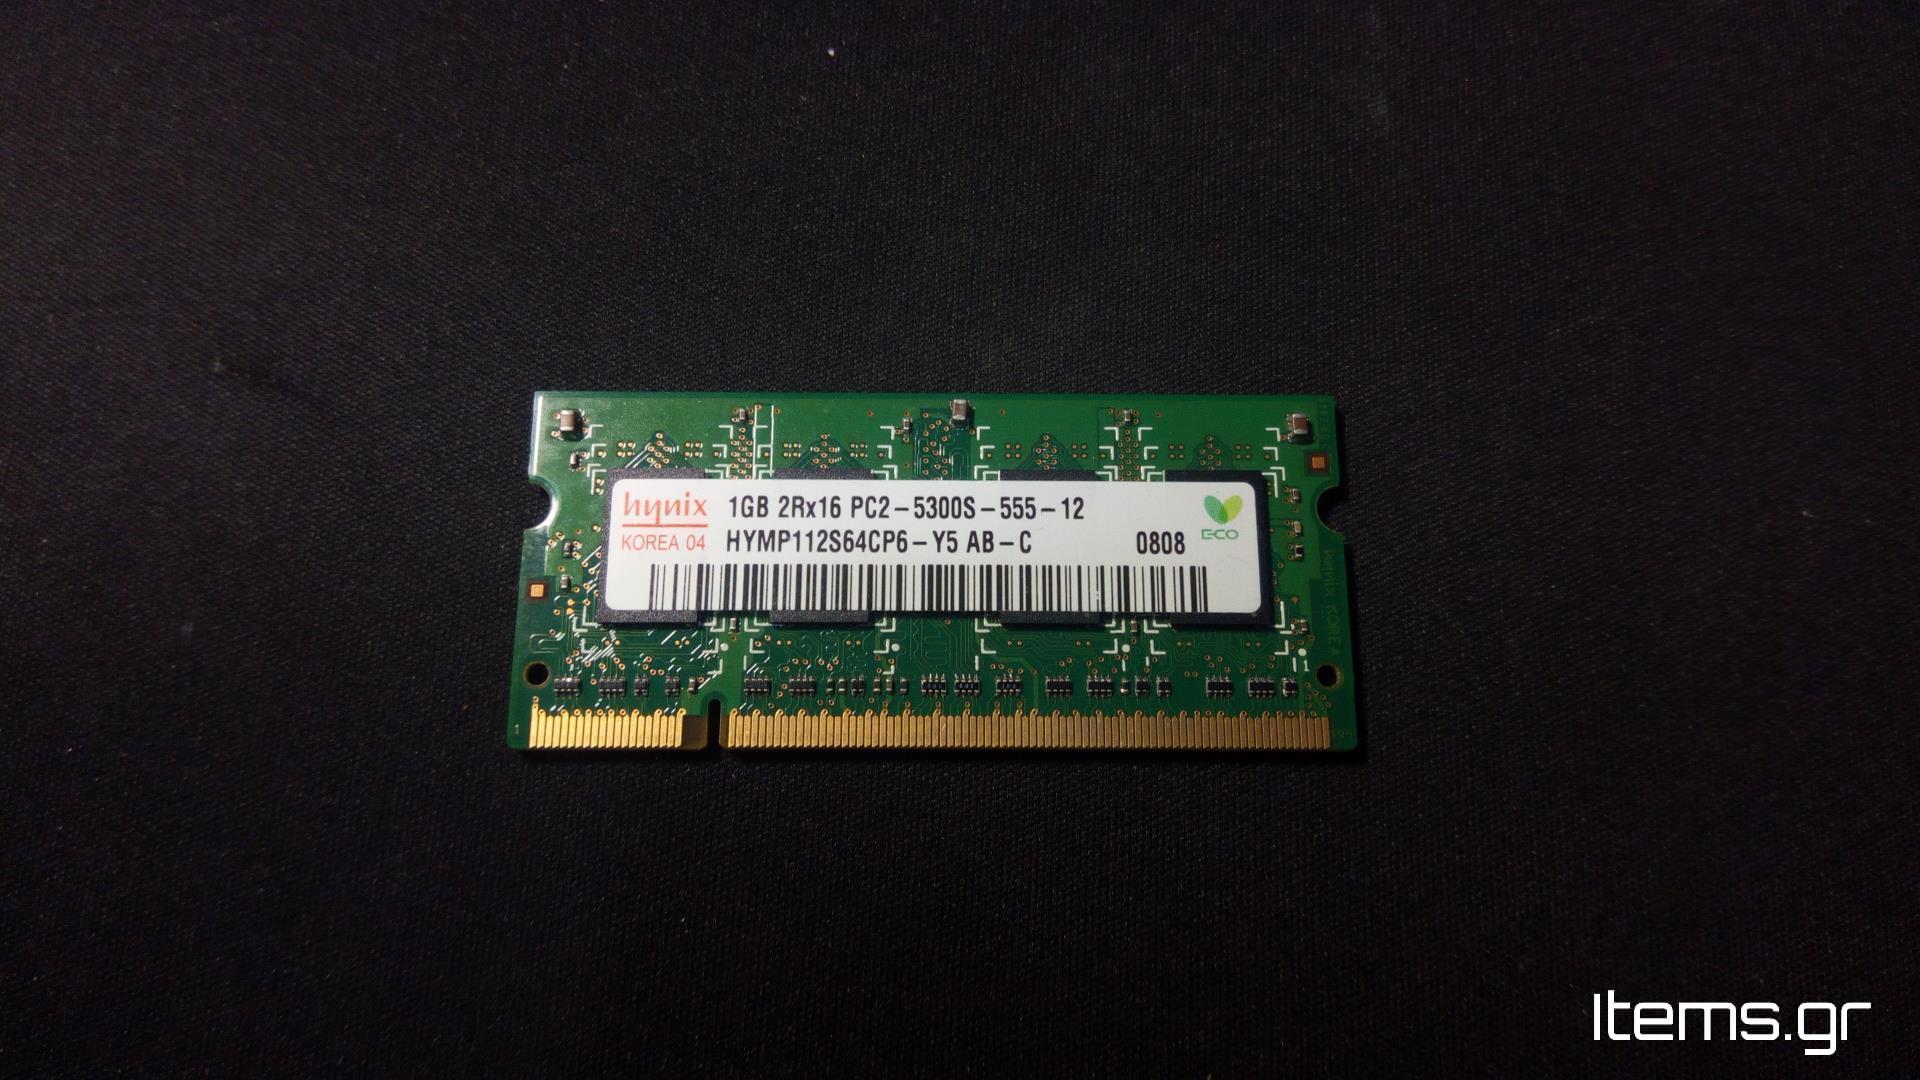 Hynix 1GB 2Rx16 PC2-5300S-555-12 DDR2 667MHz CL5 200 Pin SoDIMM RAM